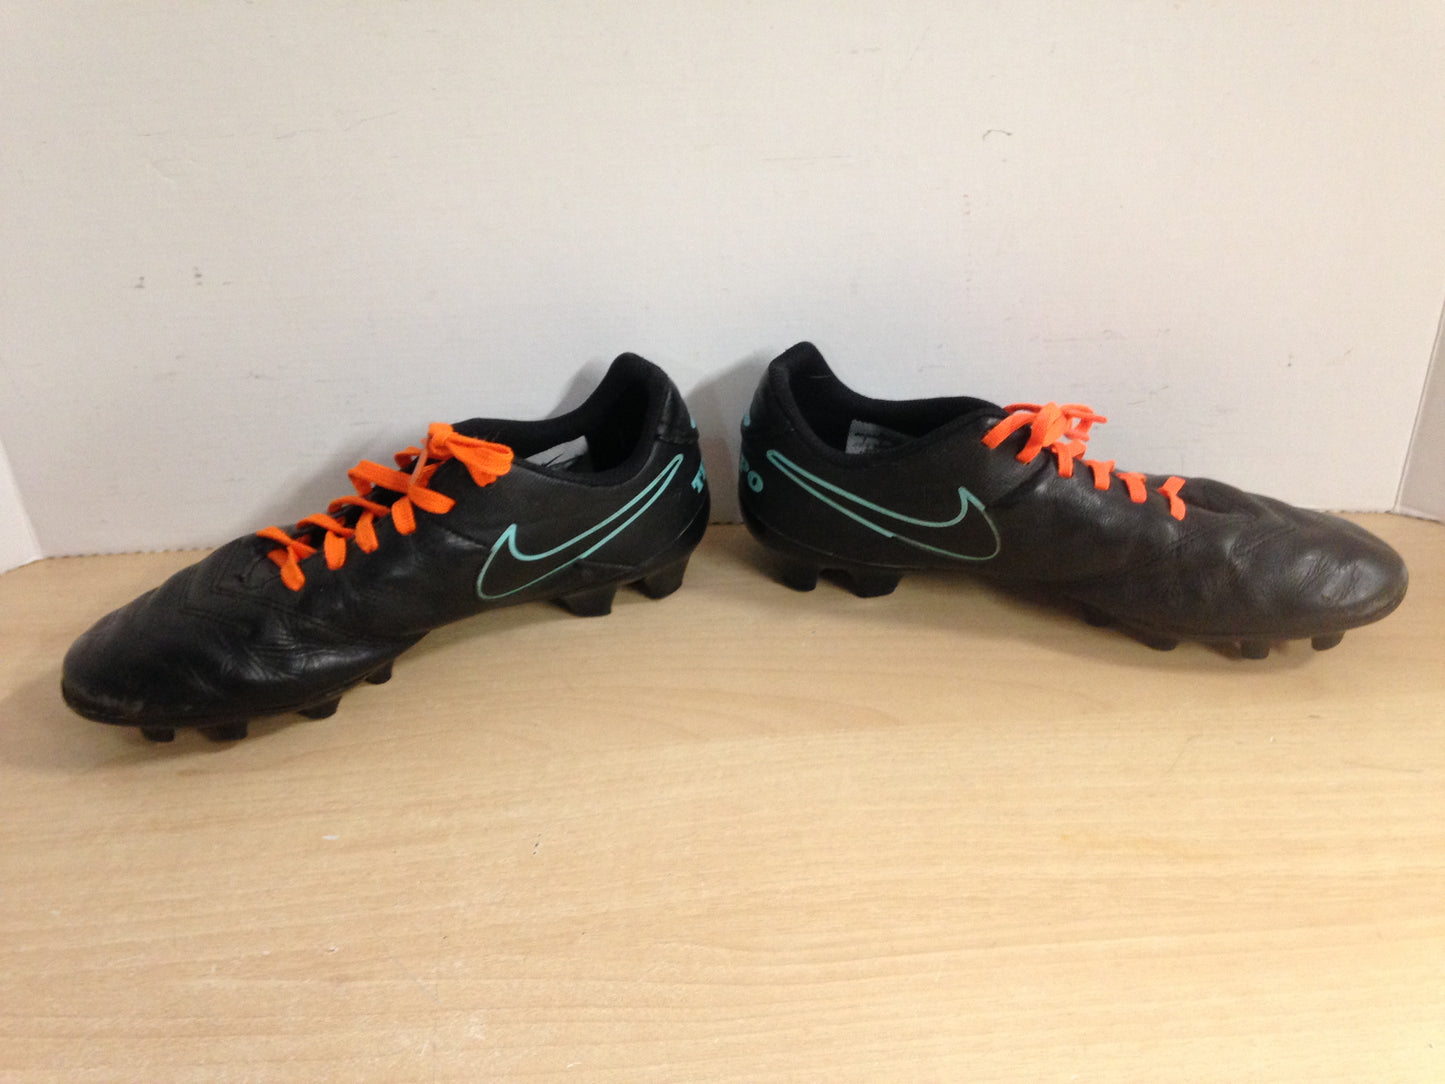 Soccer Shoes Cleats Men's Size 7 Nike Tiempo Black Orange Teal